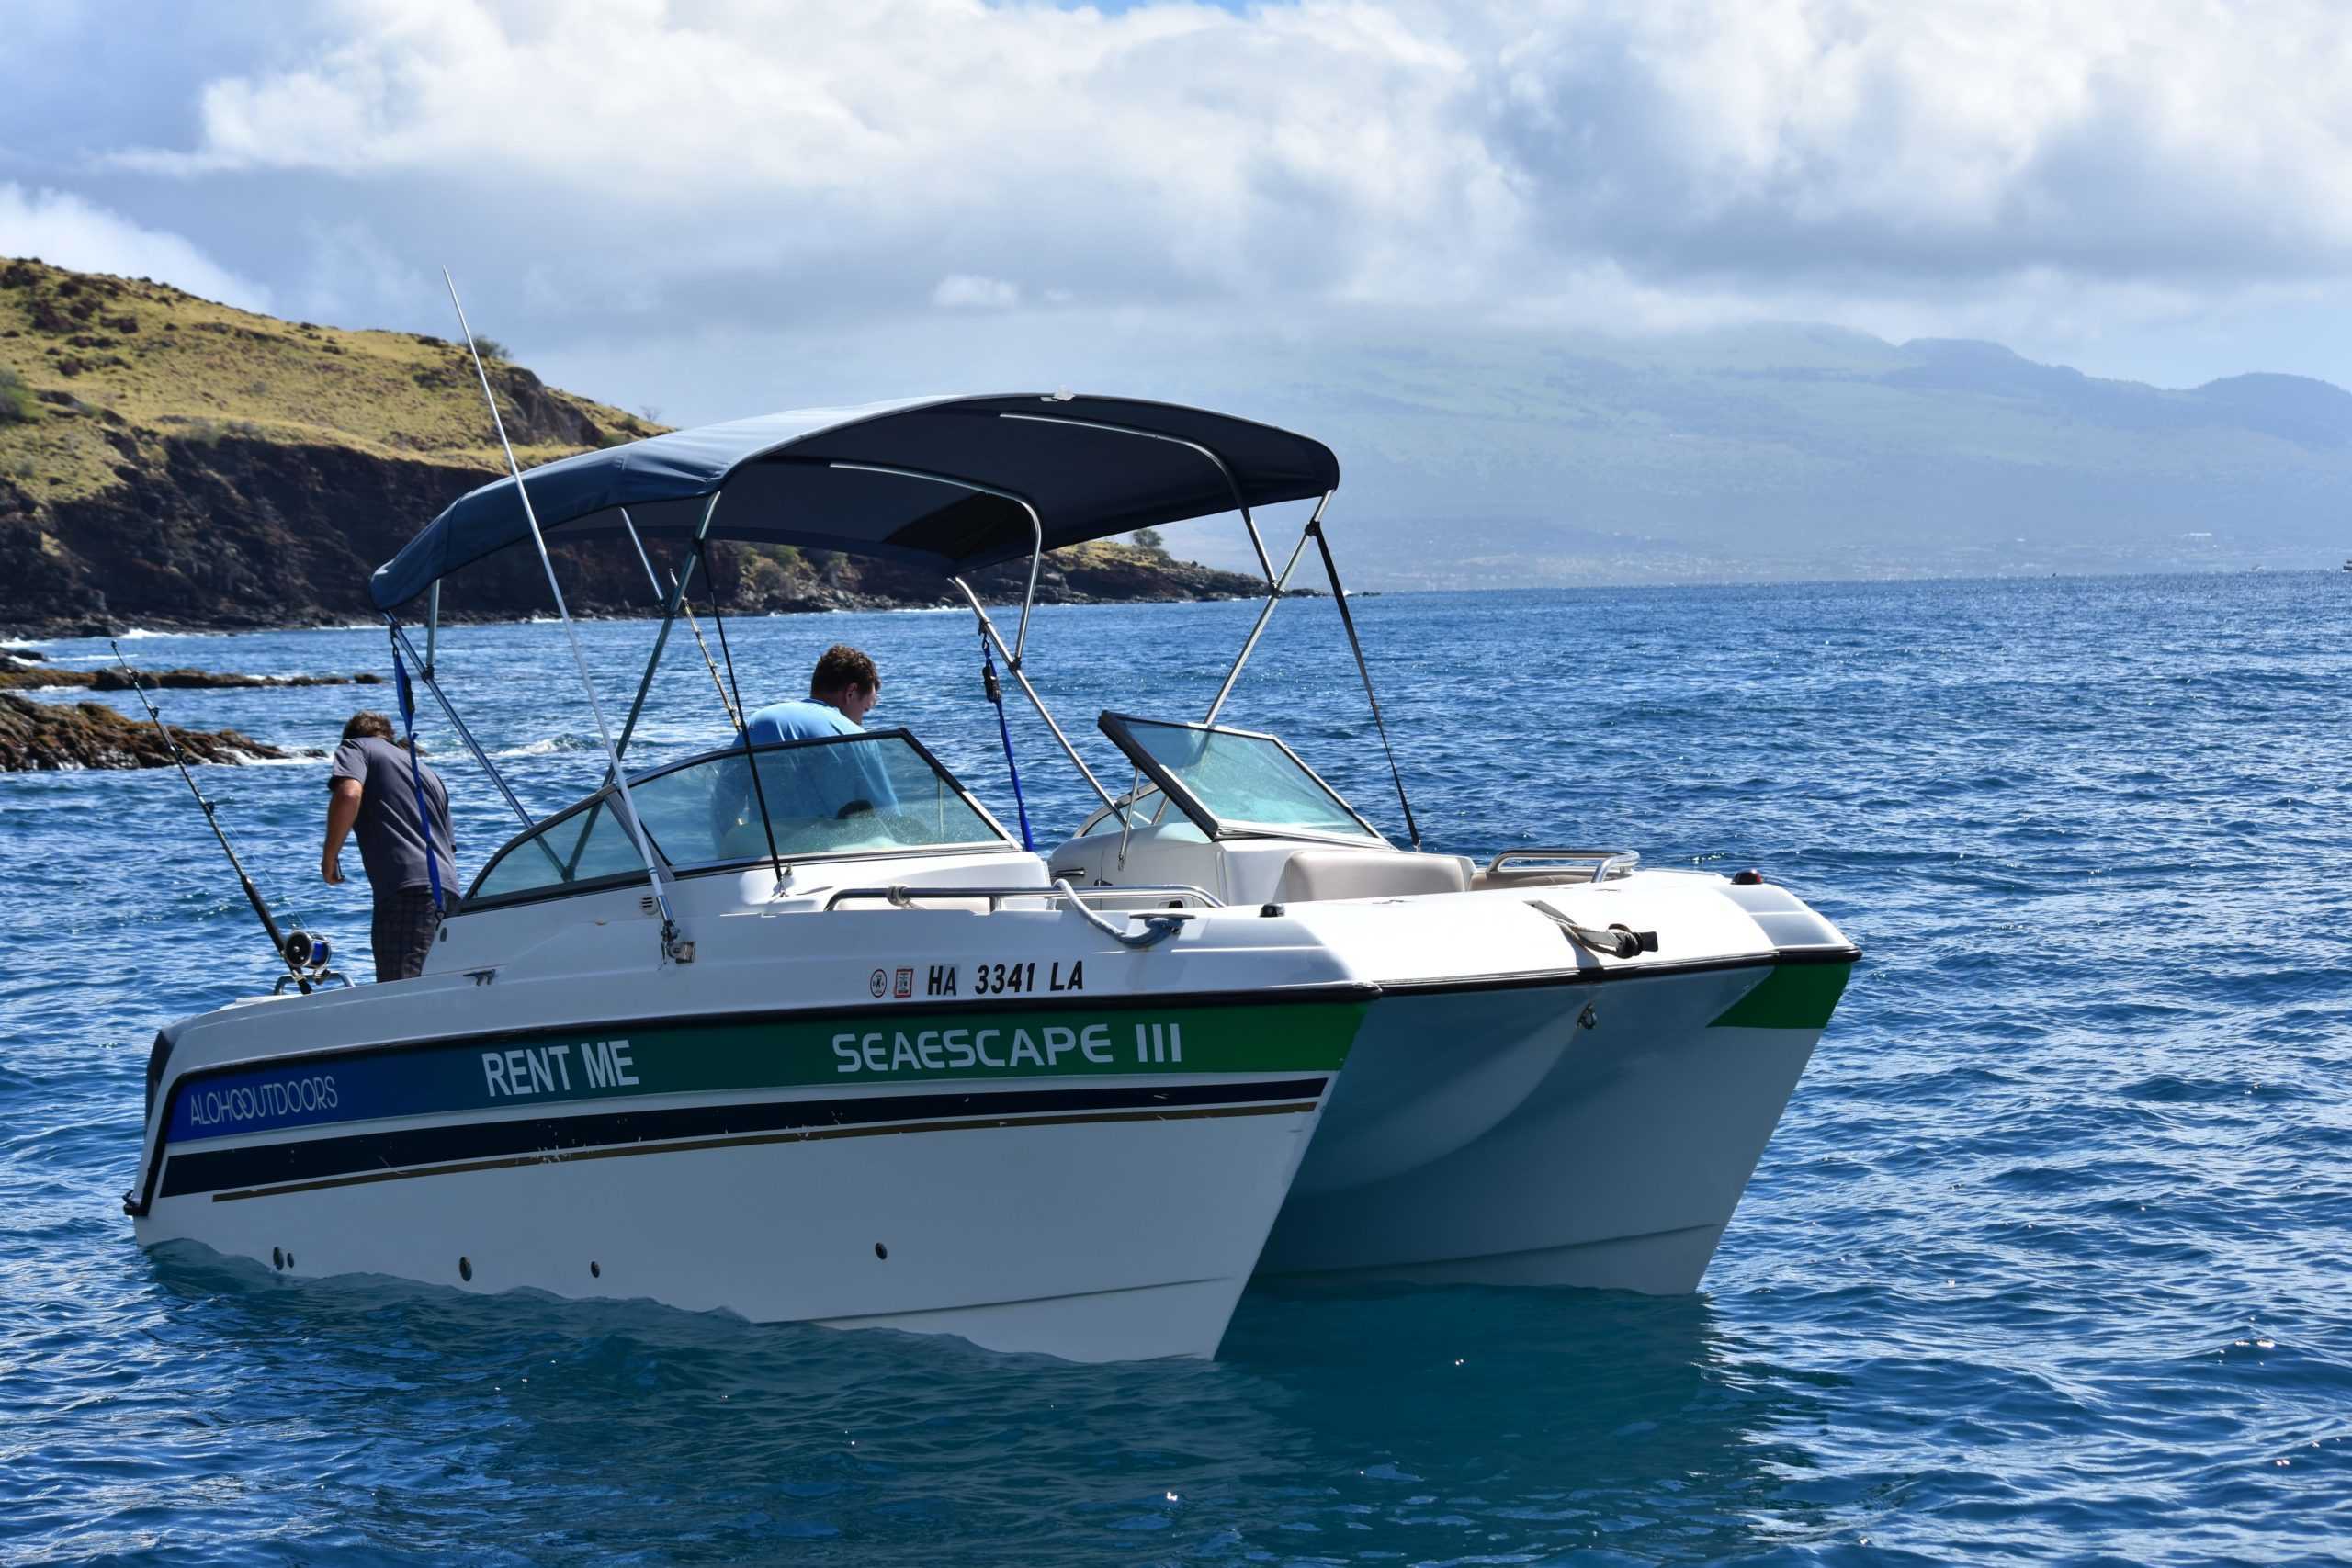 Maui Boating